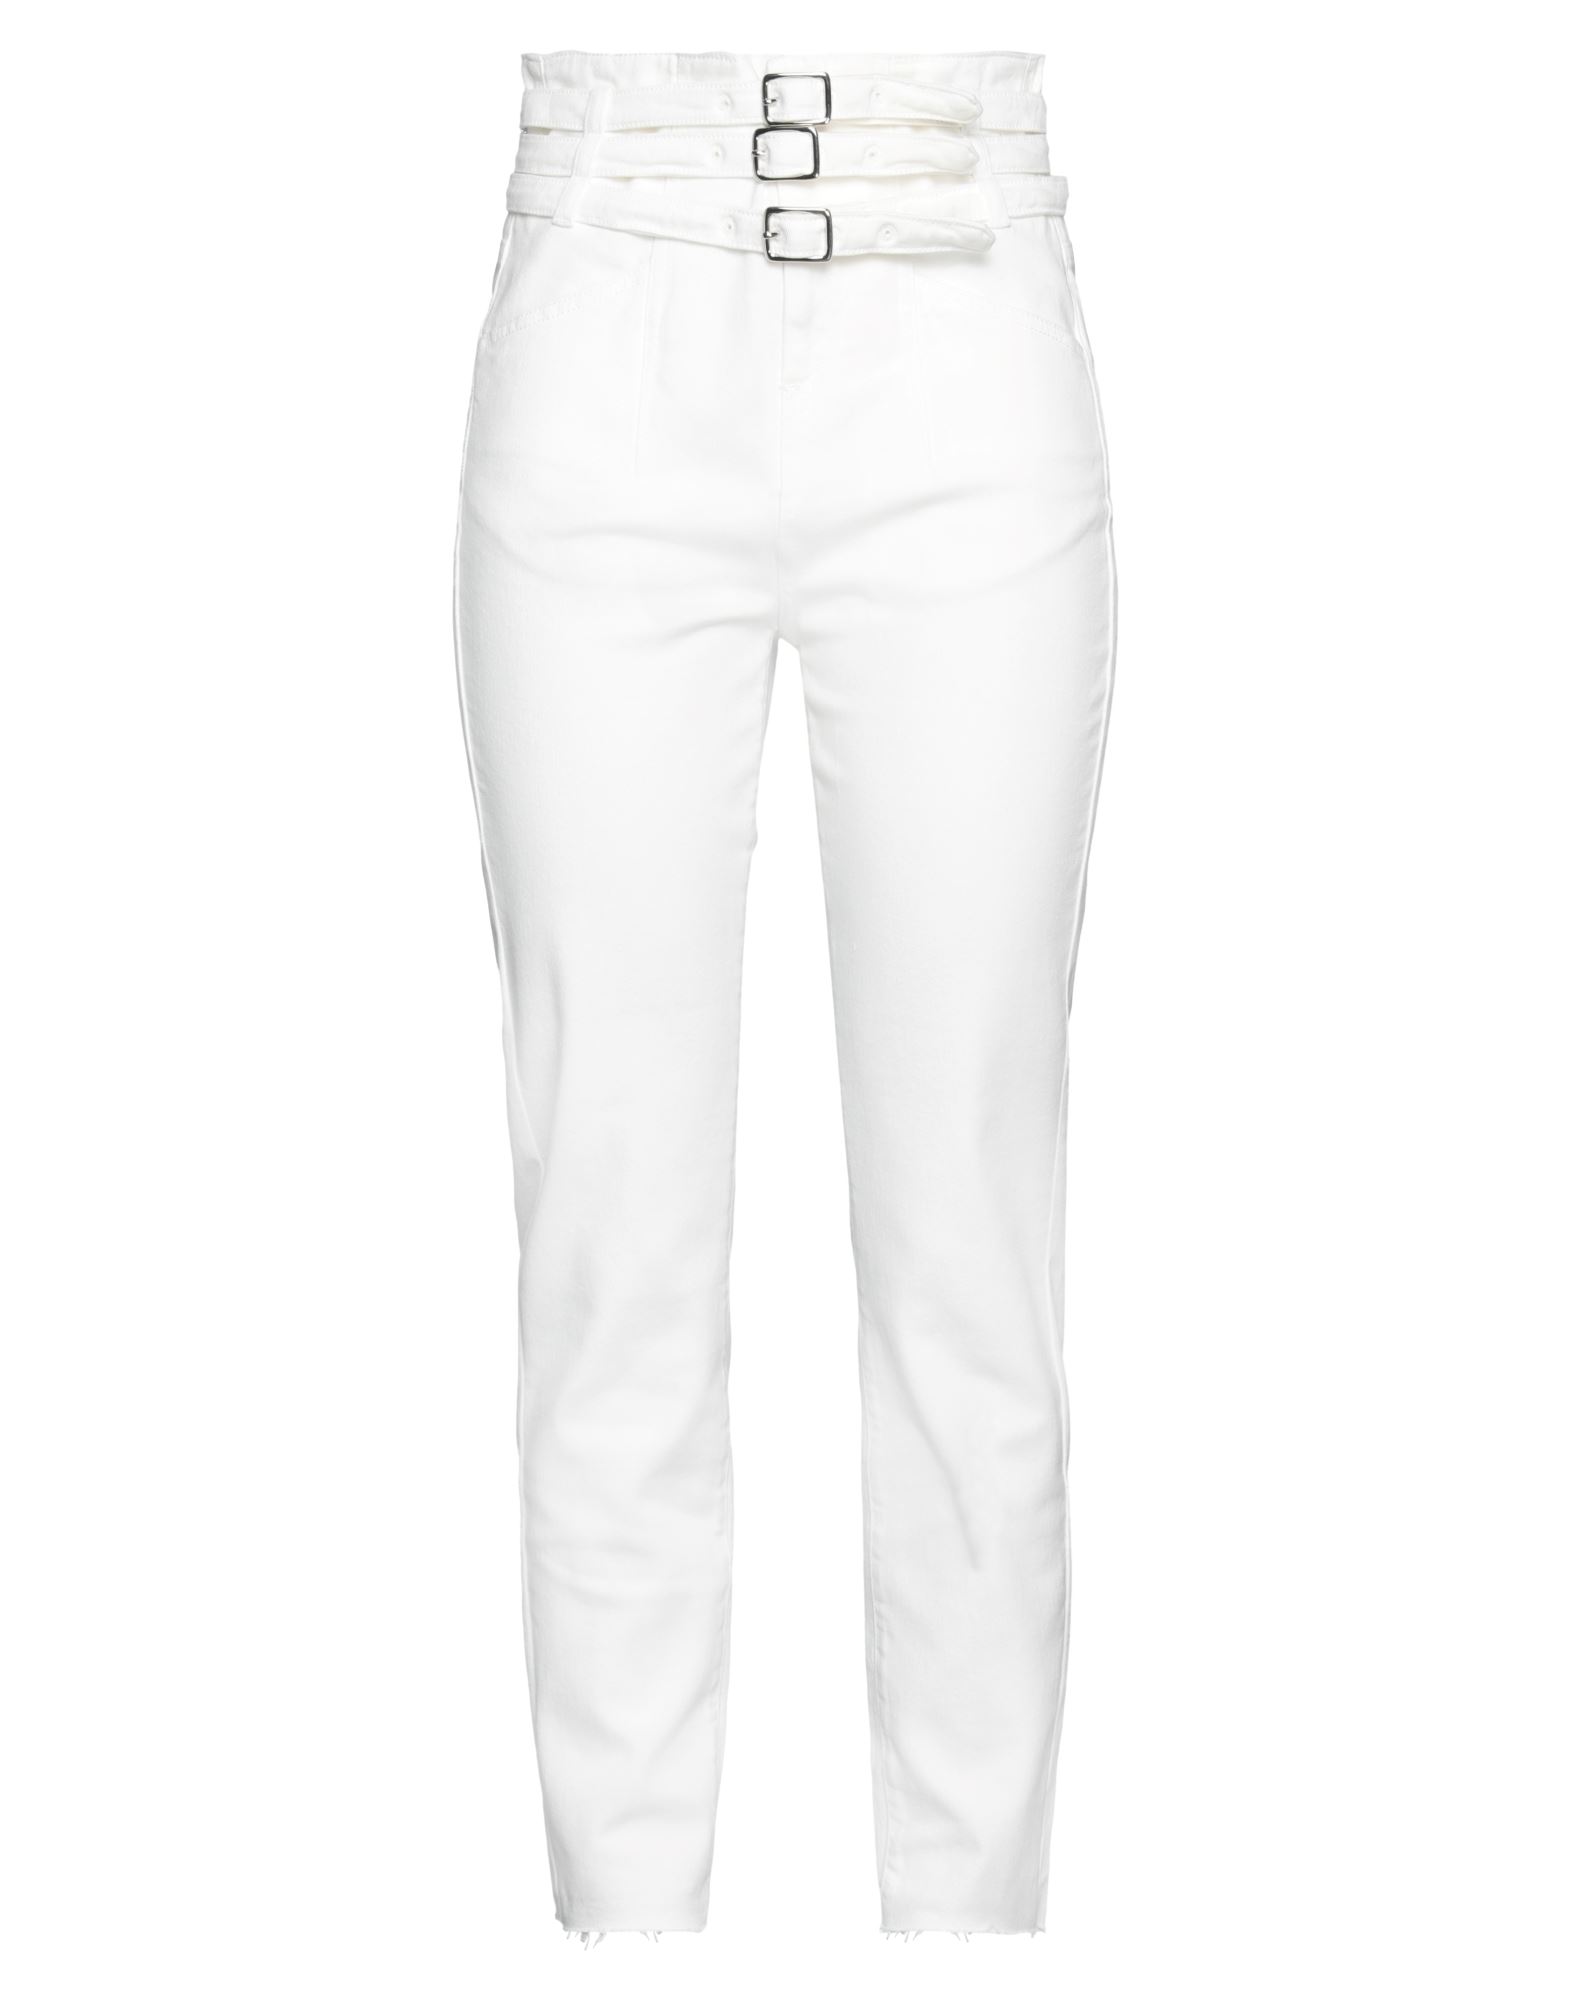 Gaelle Paris Jeans In White